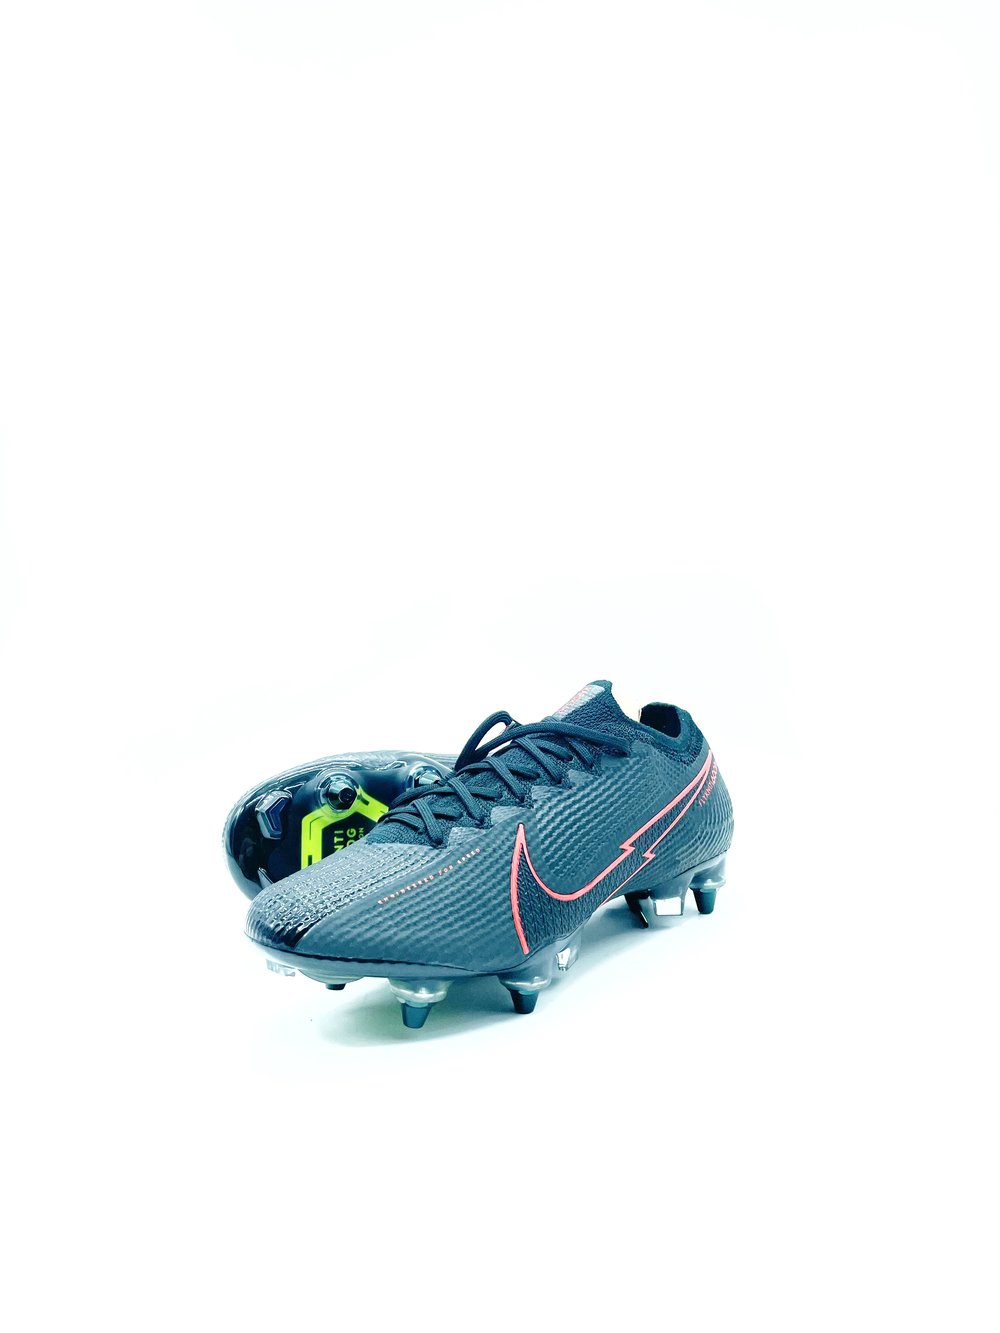 Image of Nike Vapor XIII BLACK sg 